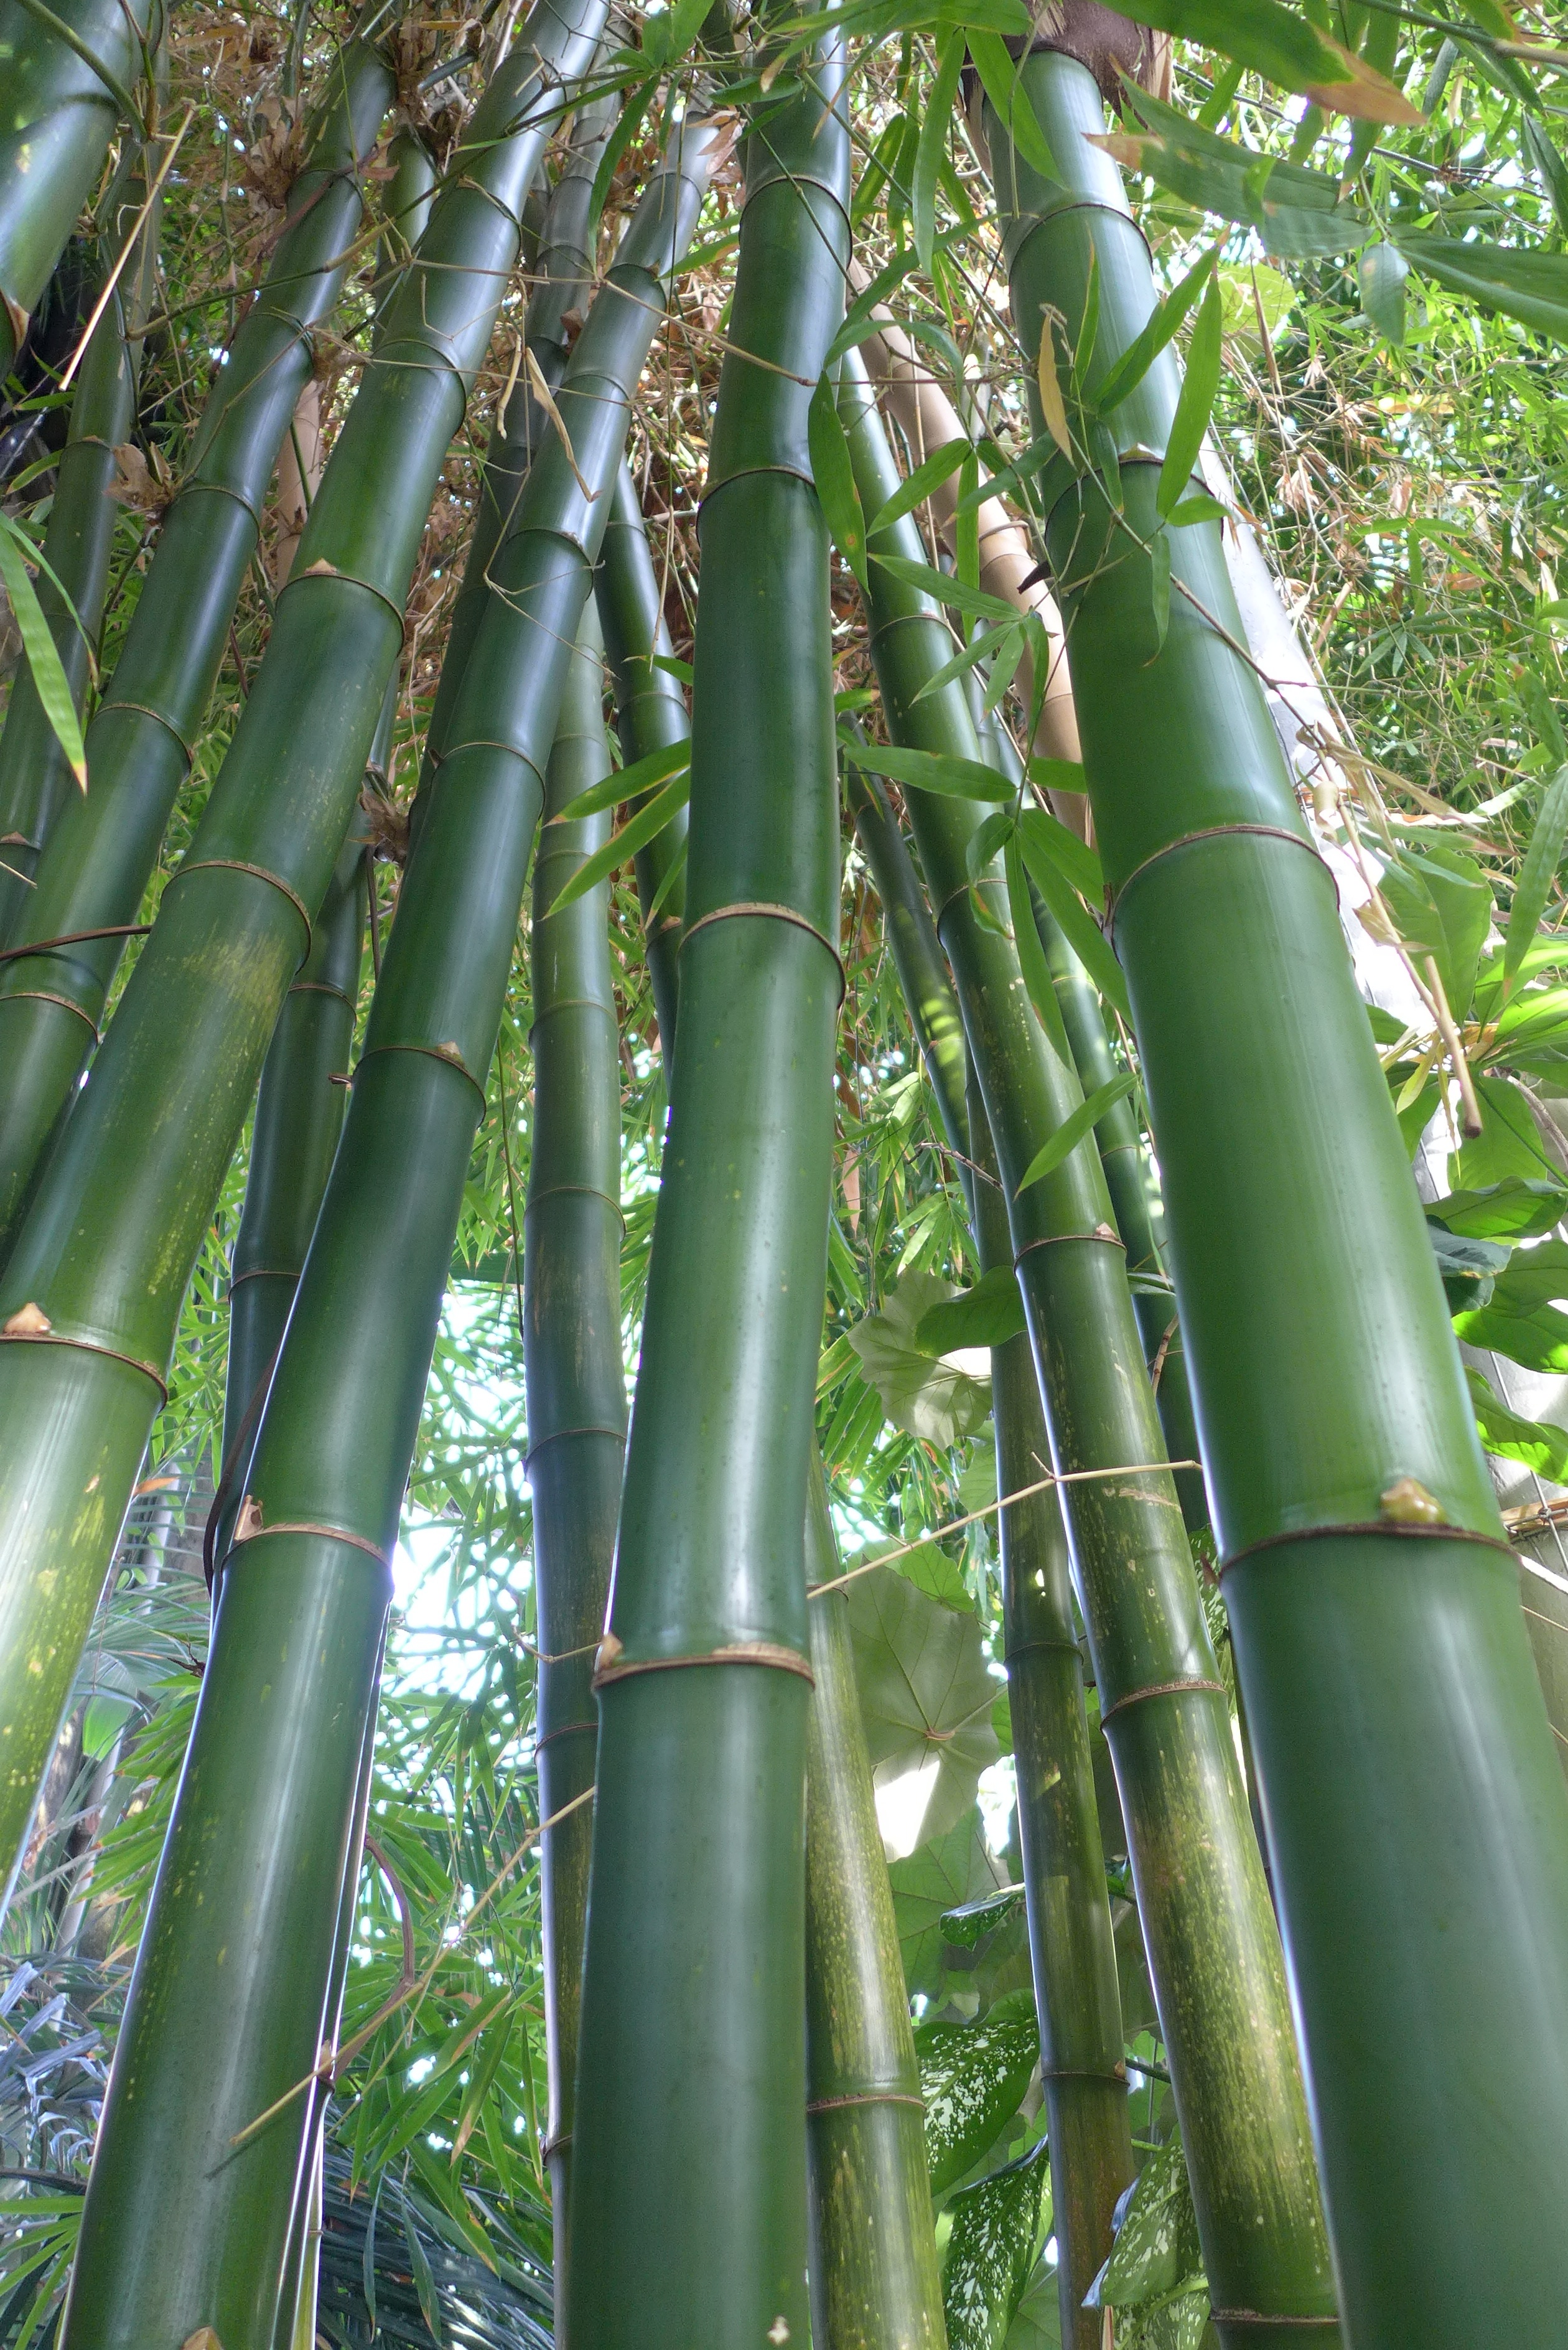 Green culms of Bambusa vulgaris